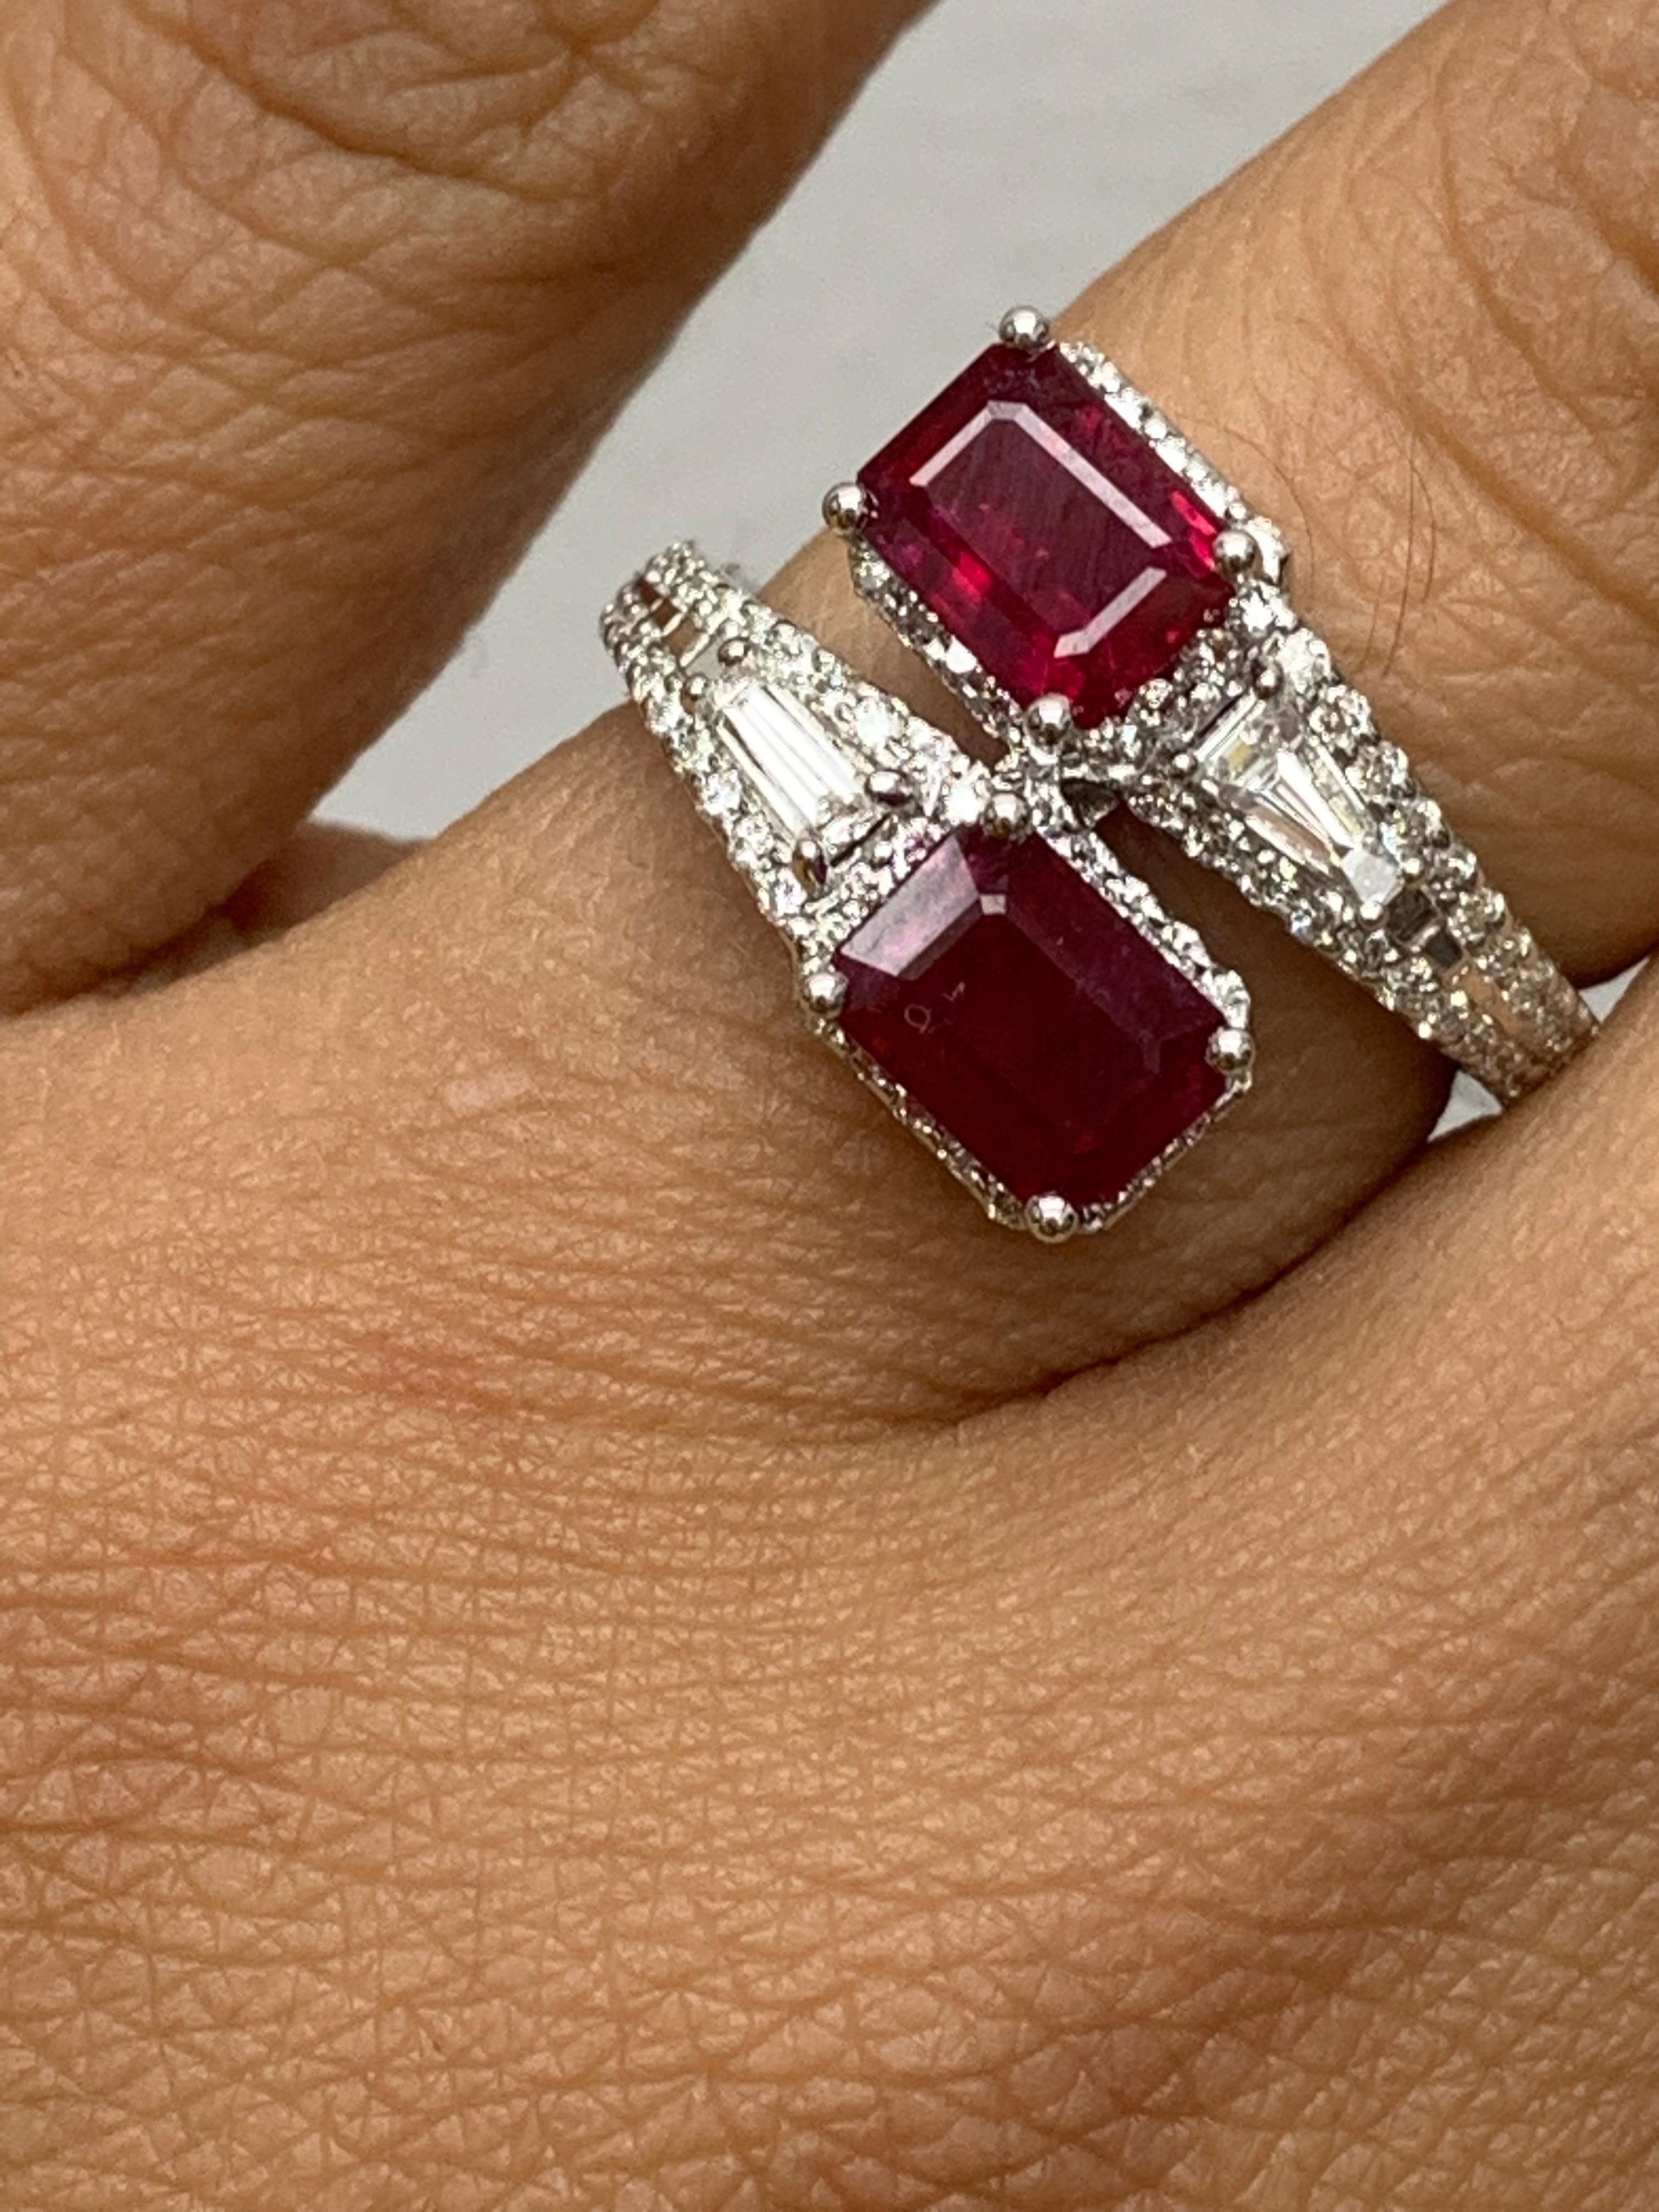 emerald cut ruby and diamond ring